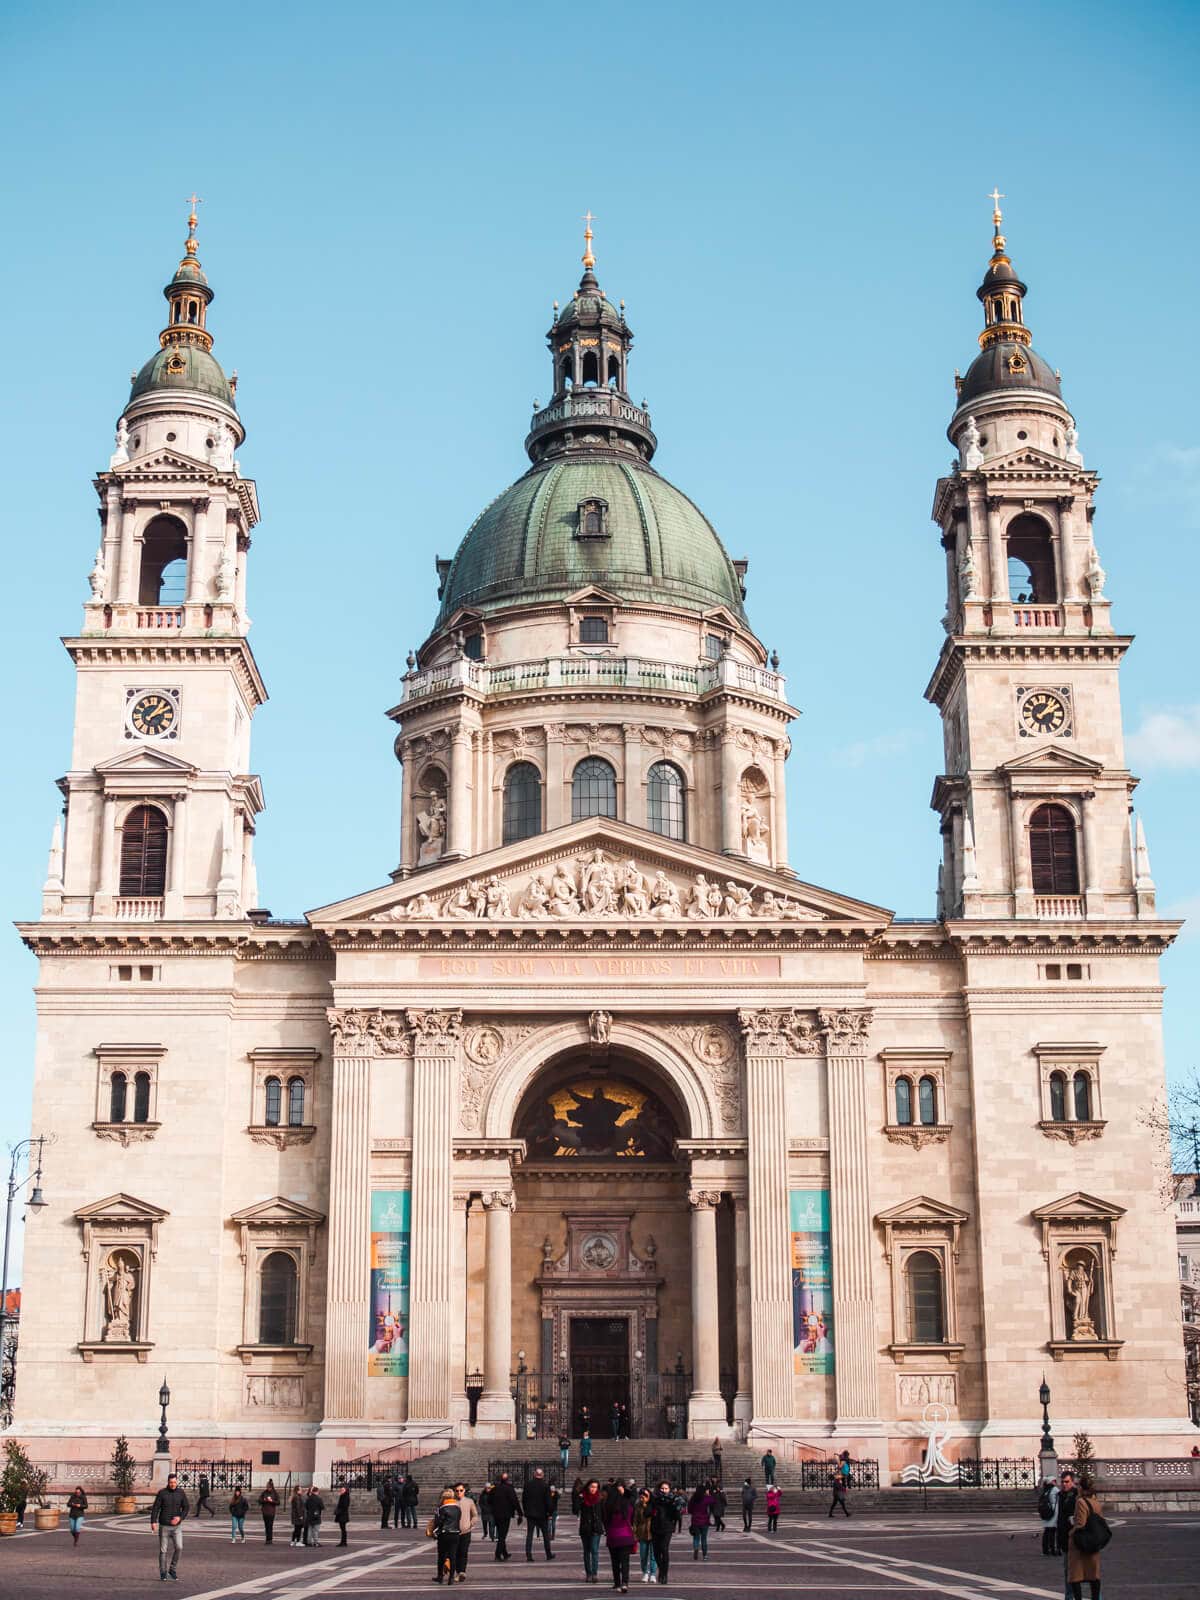 Budapest Instagram photo guide - St. Stephen's Basilica